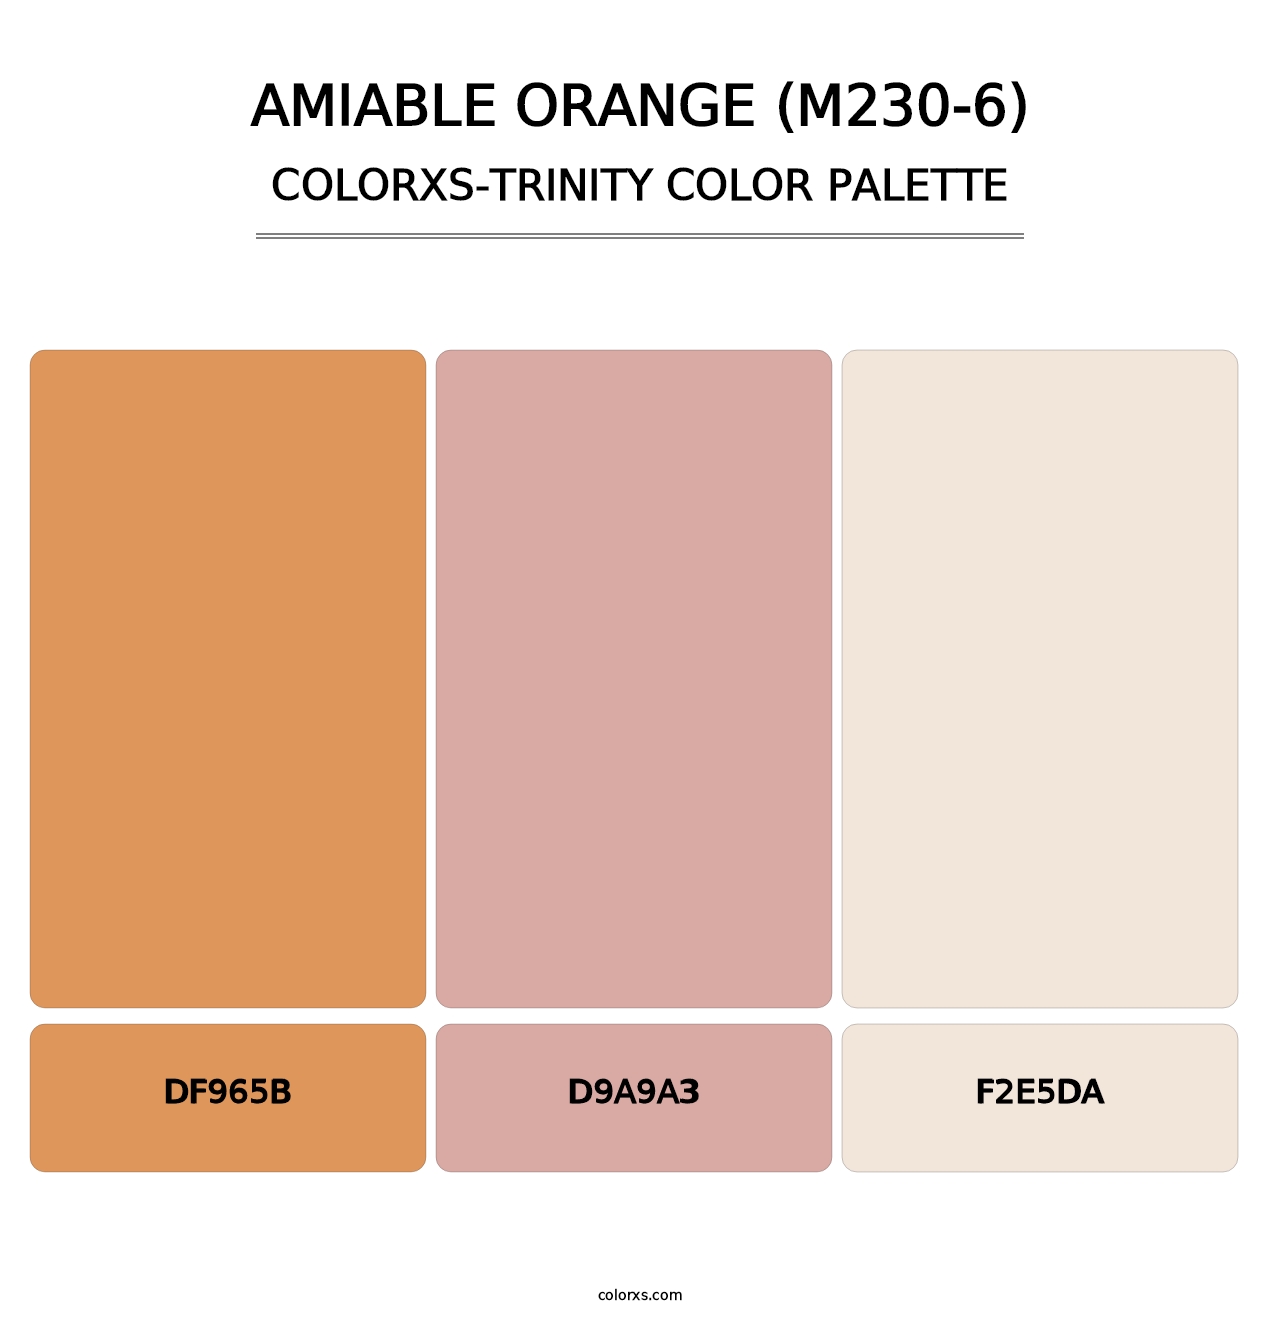 Amiable Orange (M230-6) - Colorxs Trinity Palette